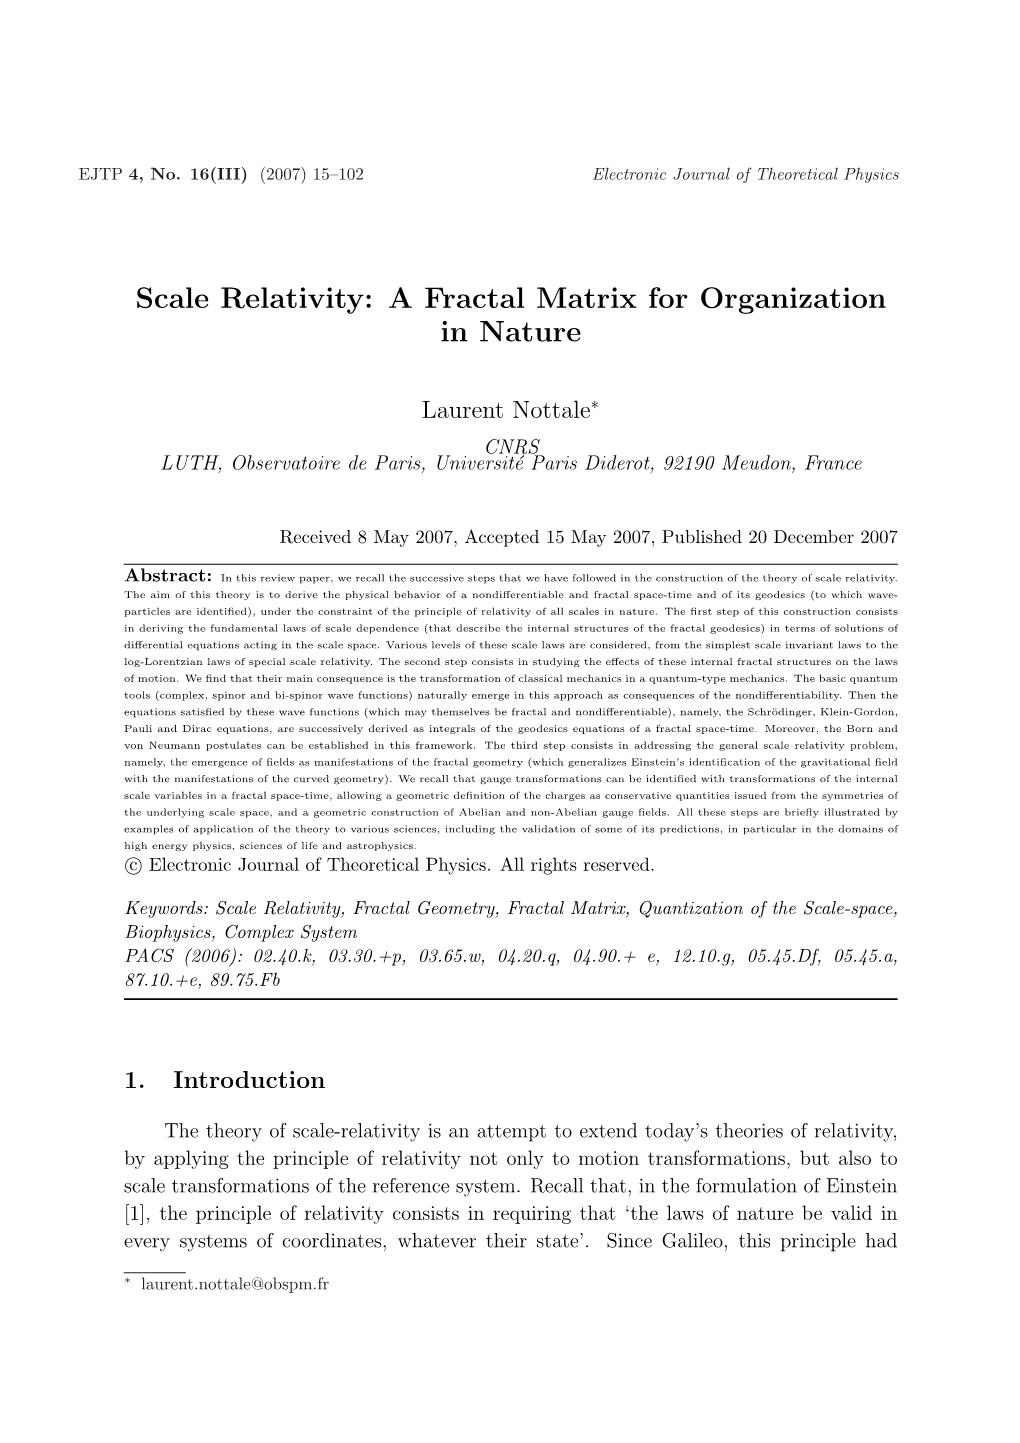 Scale Relativity: a Fractal Matrix for Organization in Nature